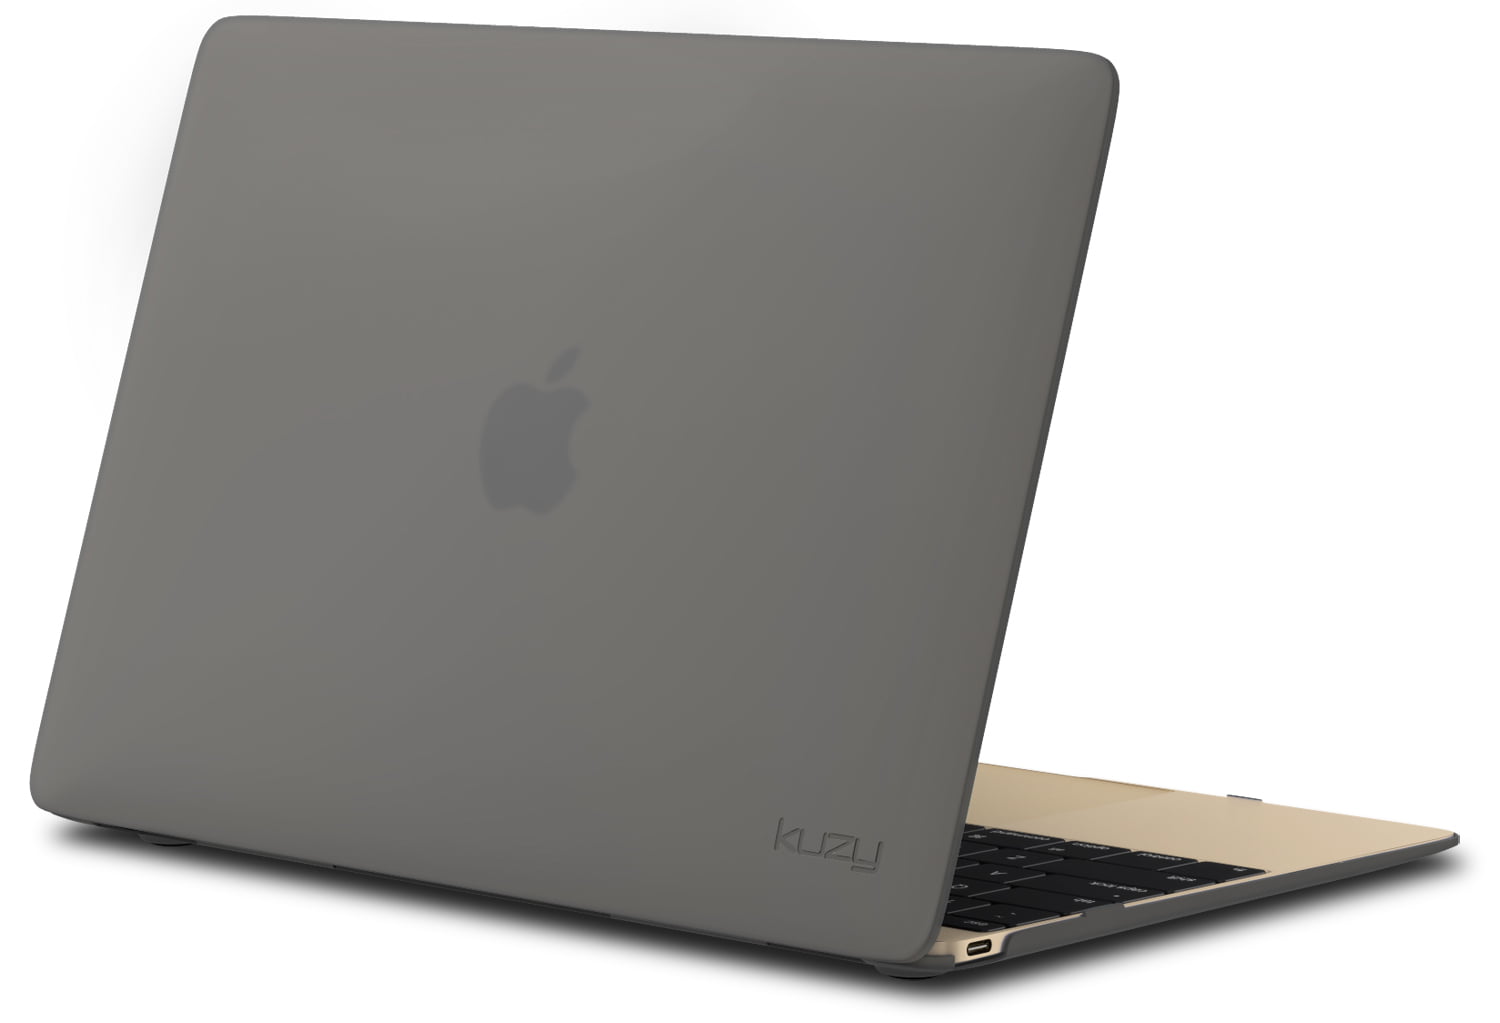 Rubberized Matte Hard Macbook Case+Keyboard Cover for Macbook Retina 12inch 2015 